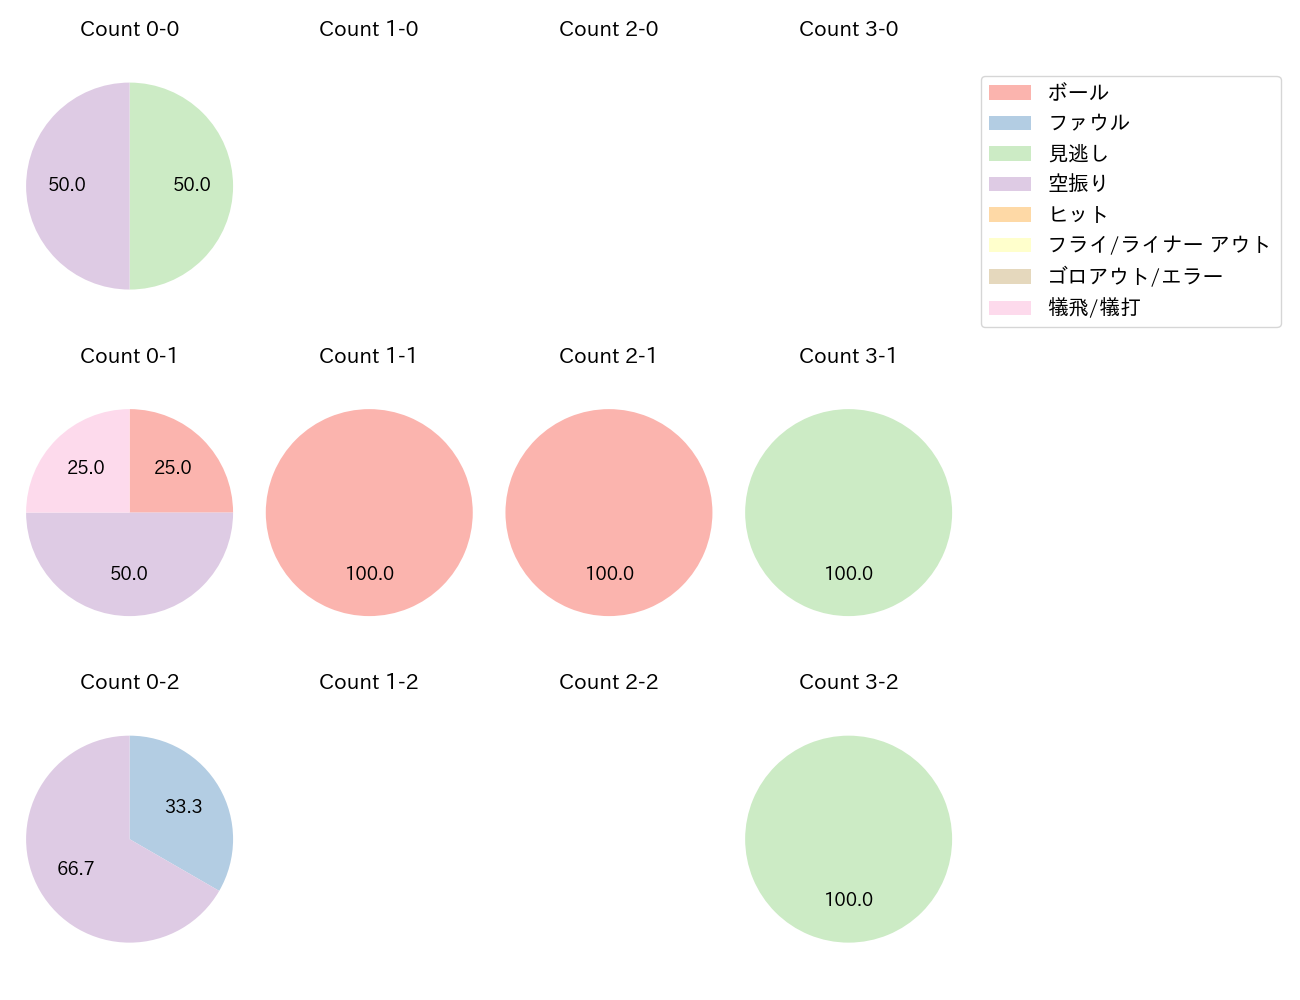 勝野 昌慶の球数分布(2022年9月)